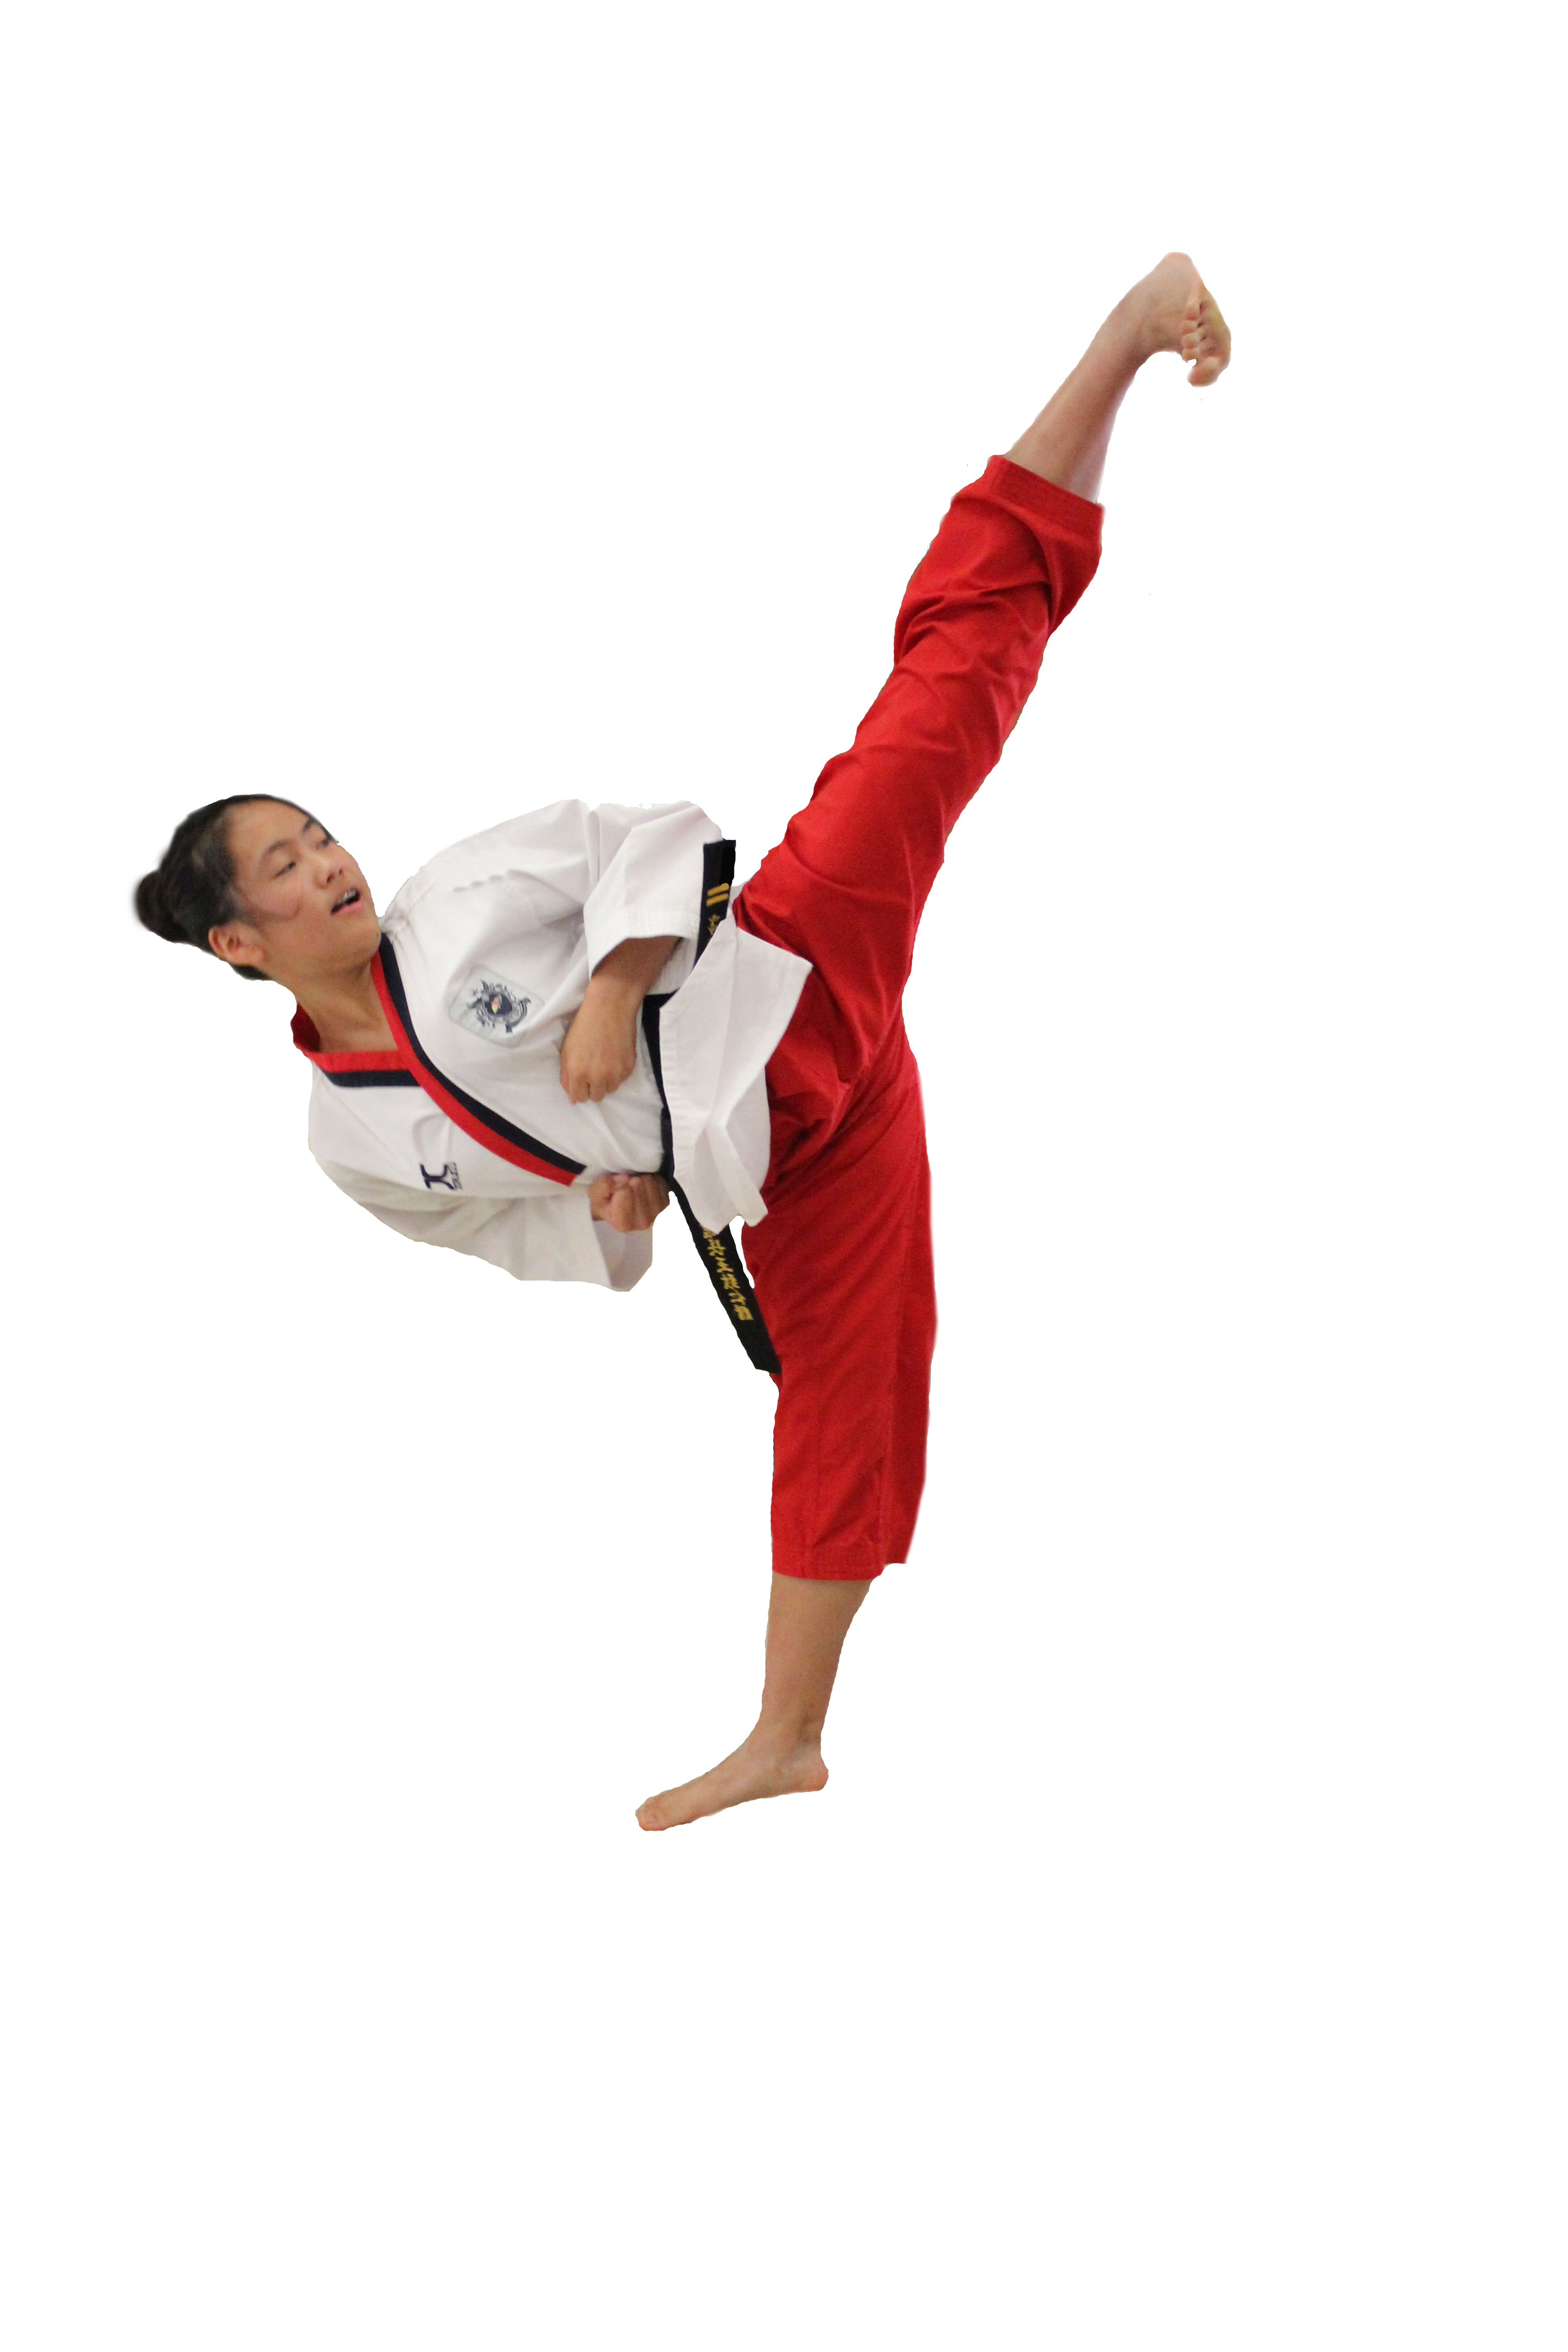 Wong medals at World Taekwondo competition